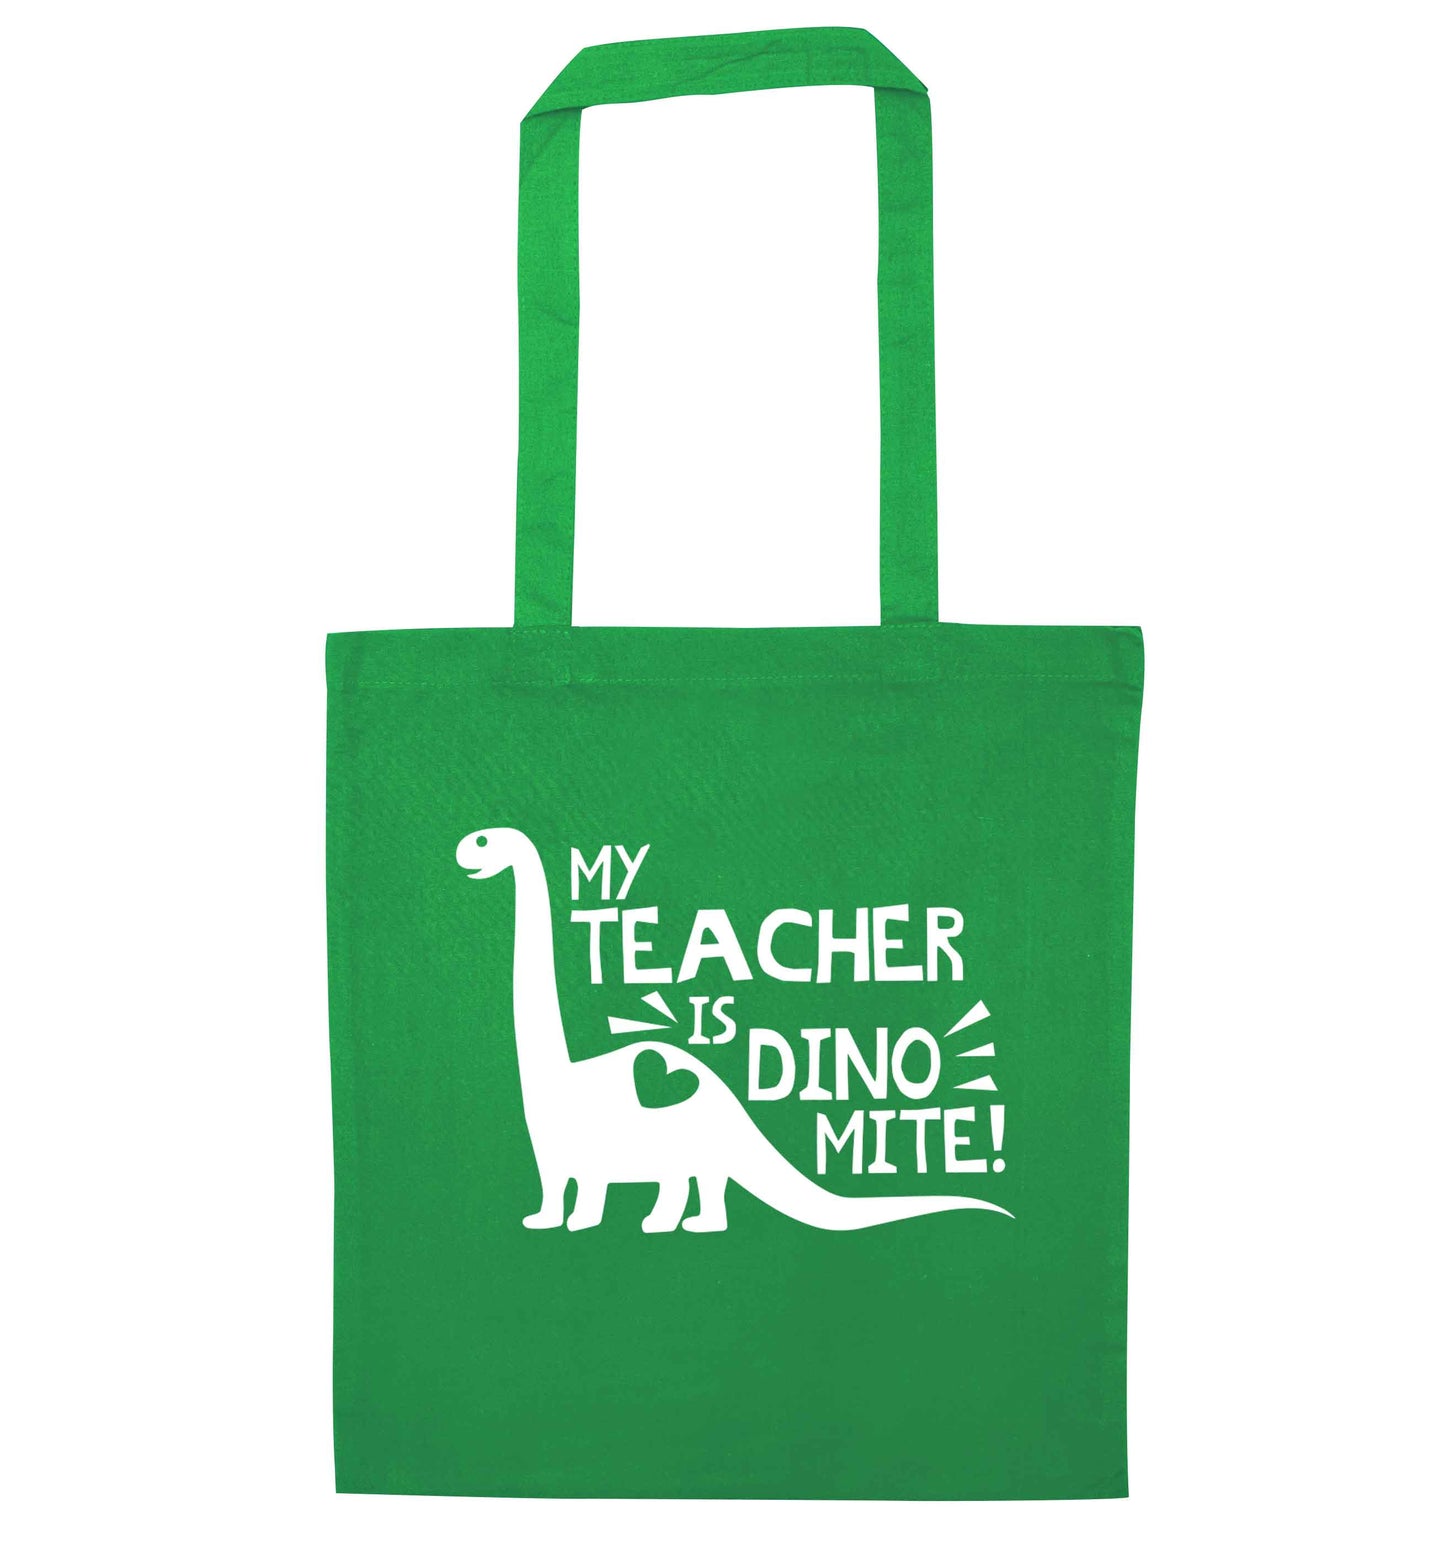 My teacher is dinomite! green tote bag